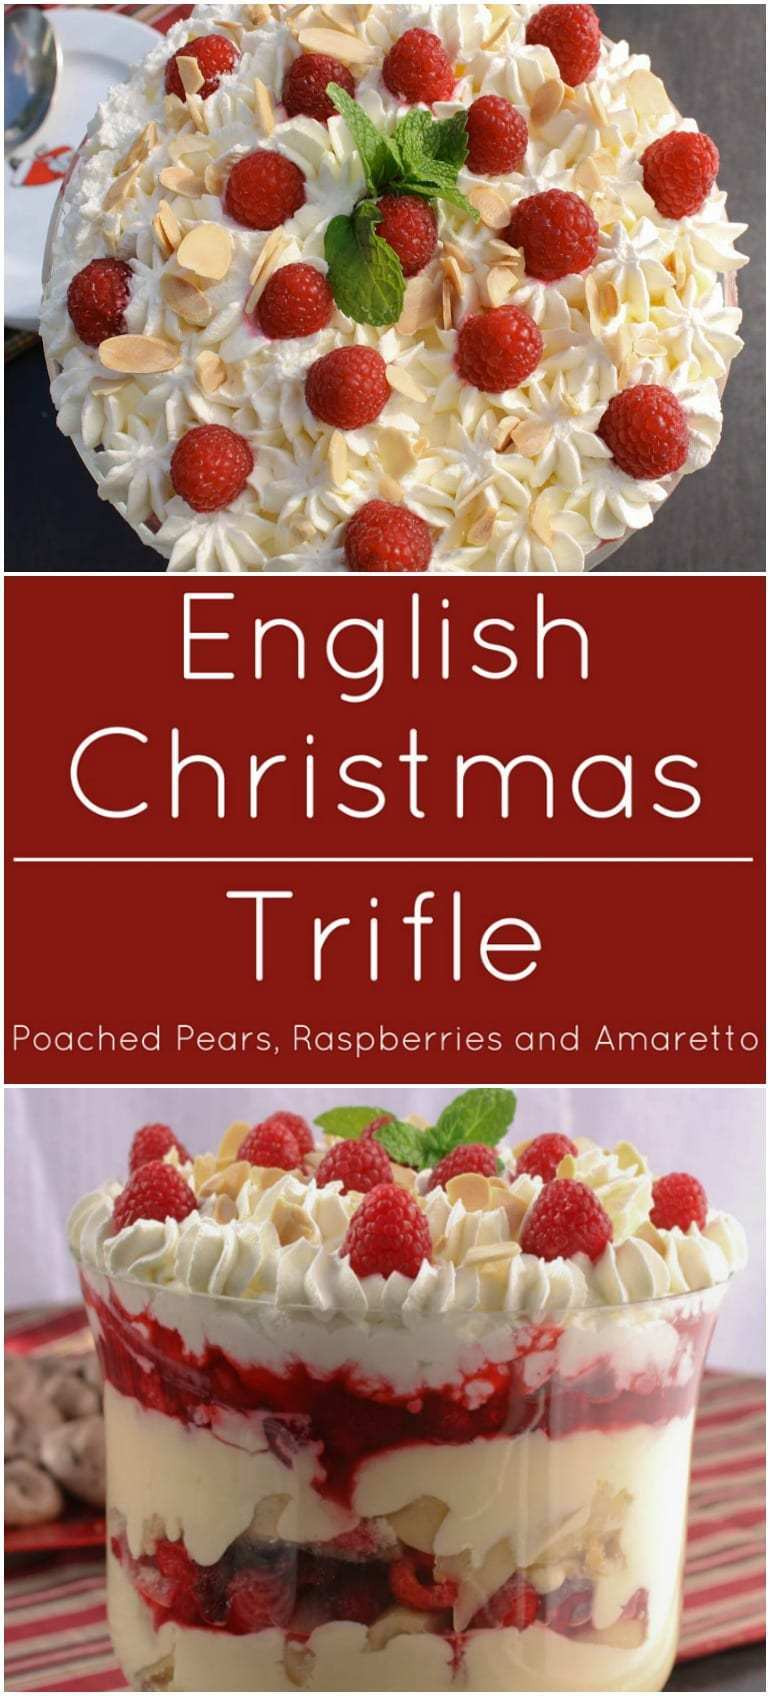 21 Best British Christmas Desserts - Most Popular Ideas of ...